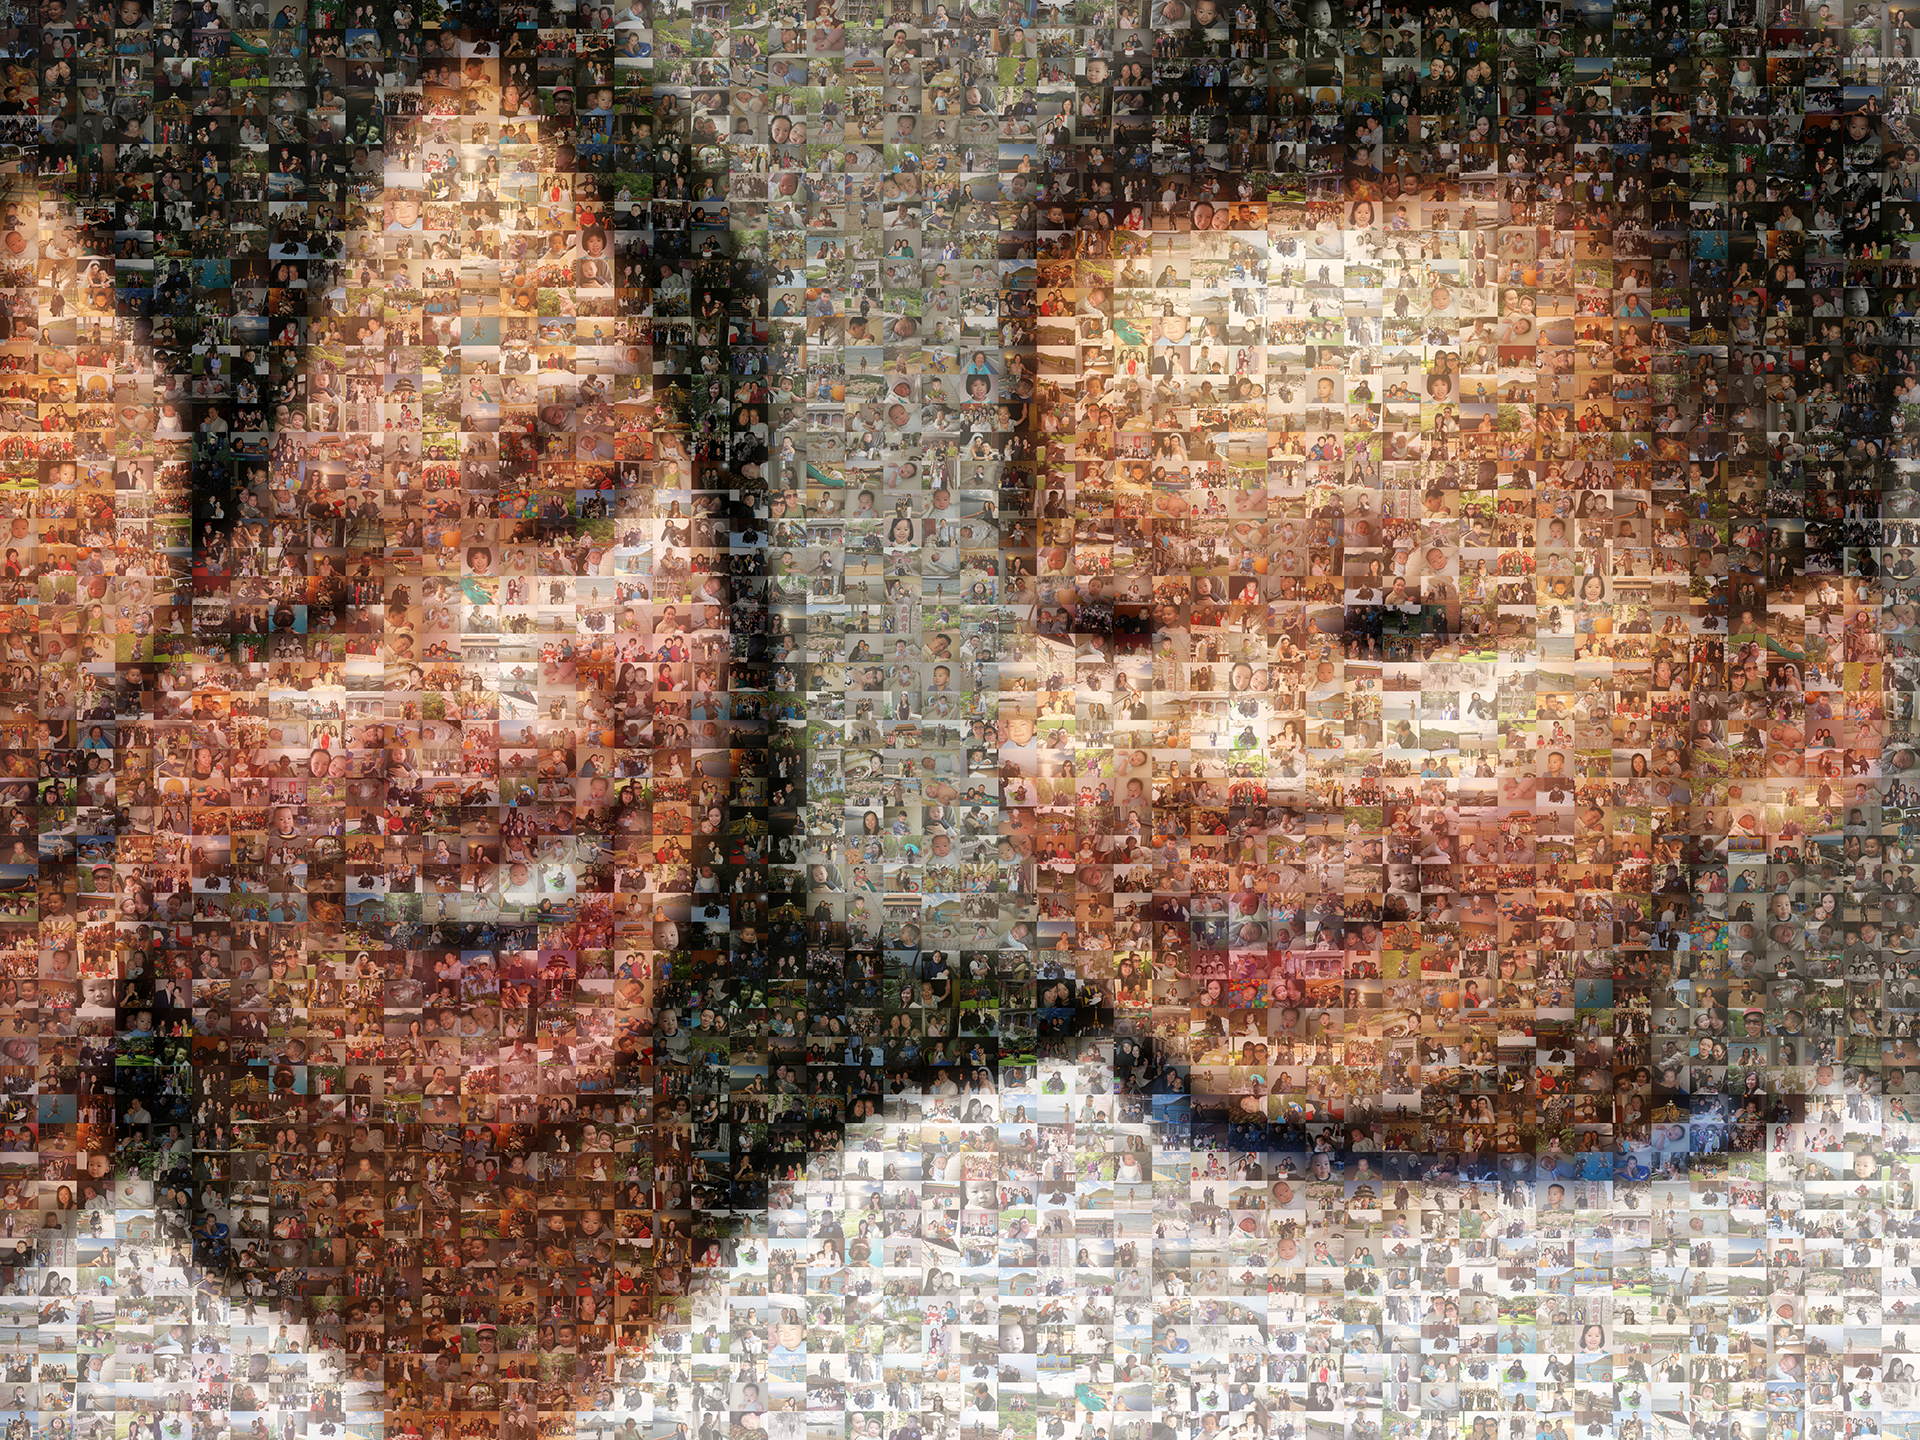 photo mosaic created using 690 family photos